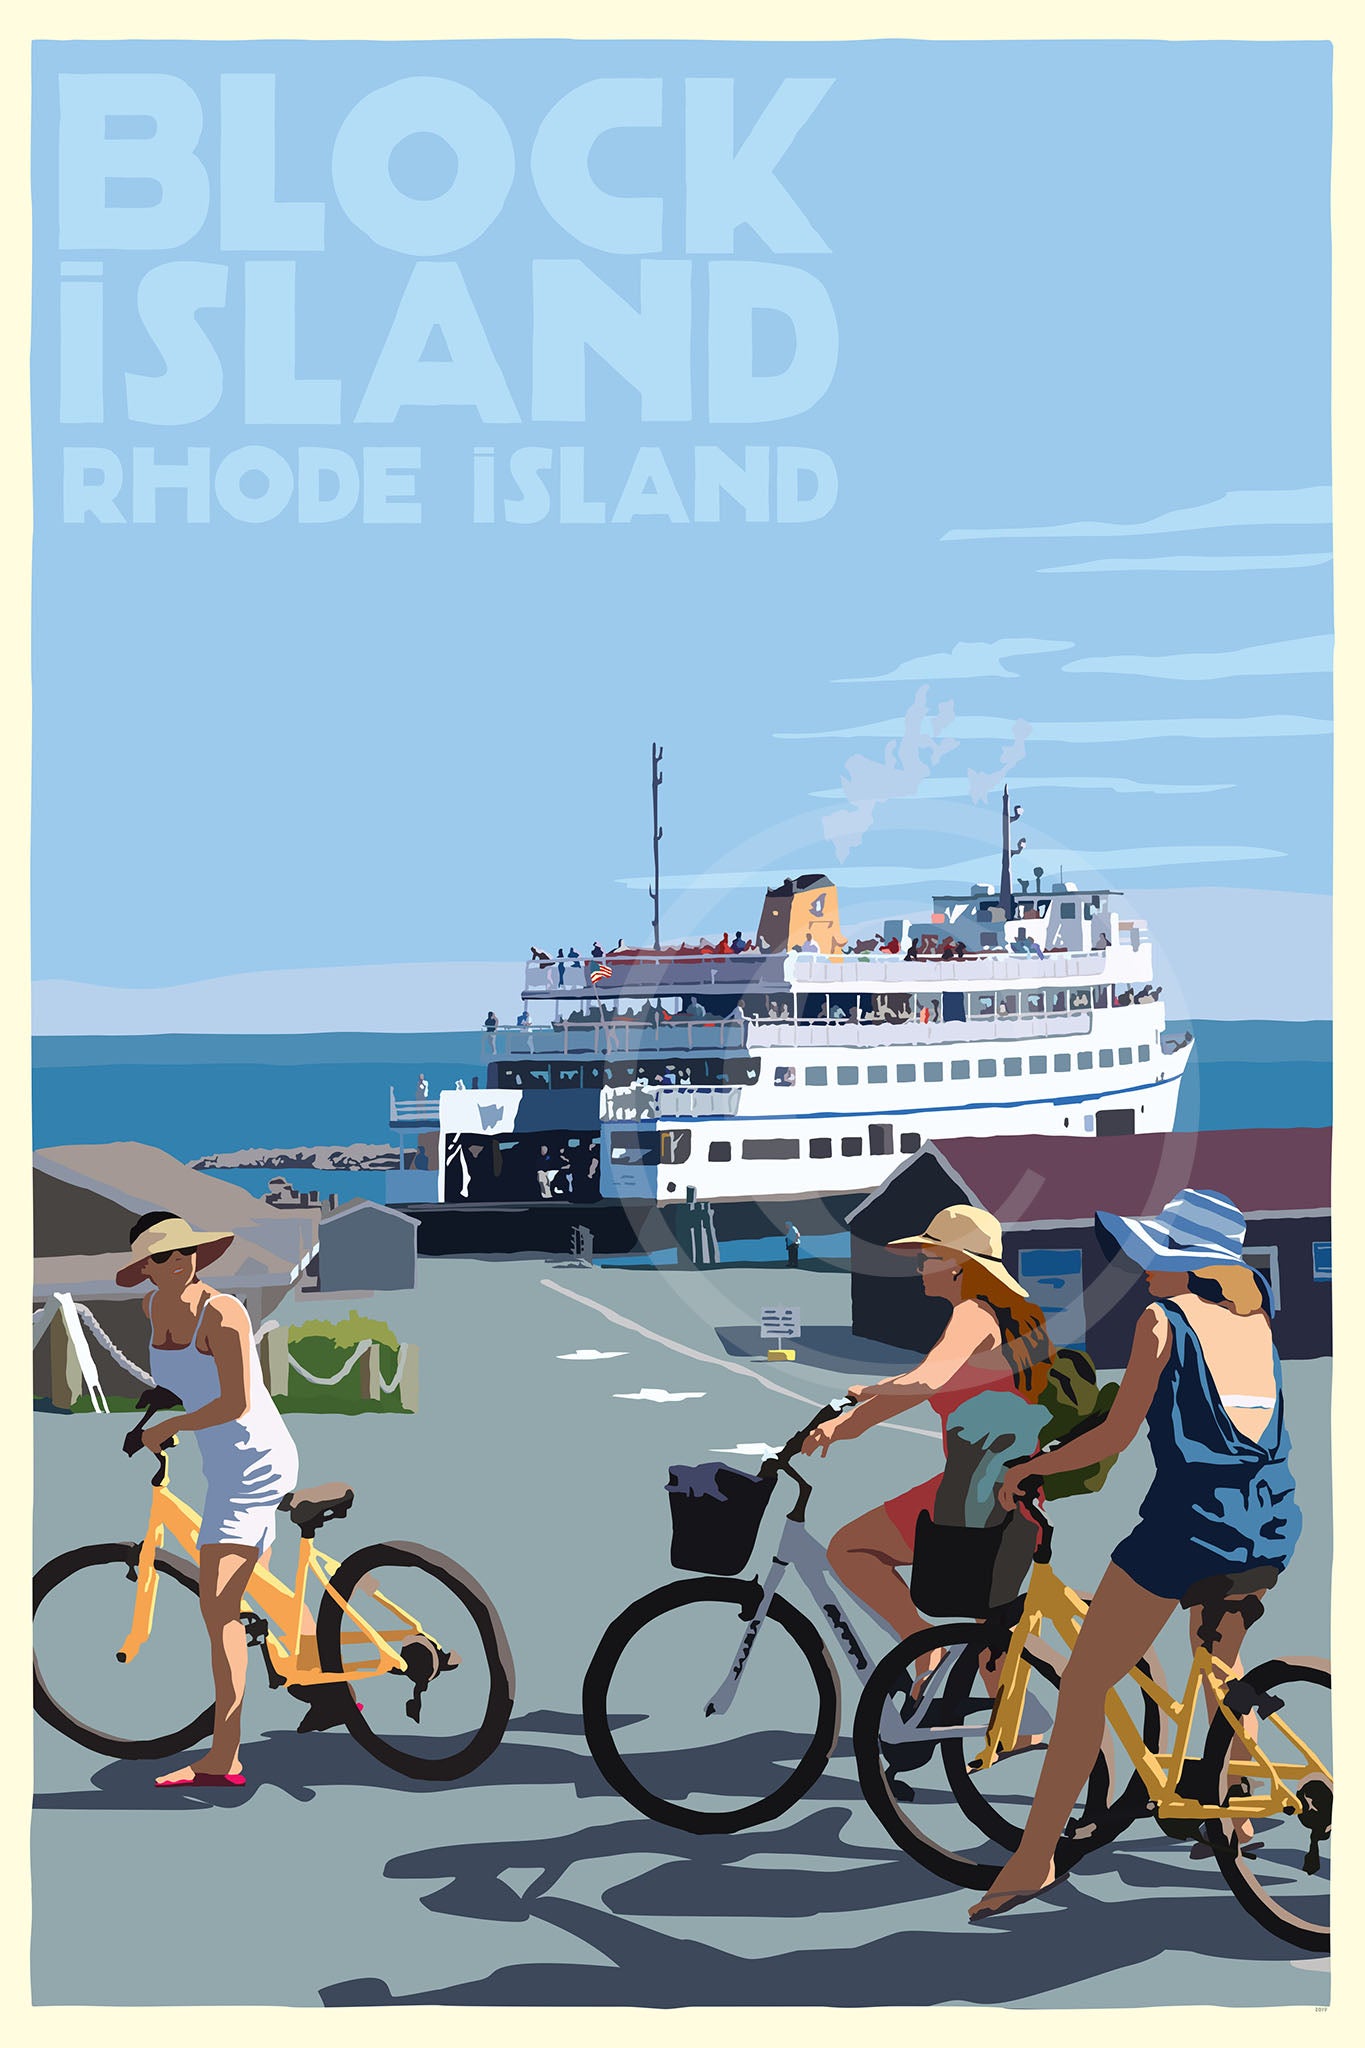 Block Island Bicycle Girls Art Print 36" x 53" Travel Poster By Alan Claude - Rhode Island